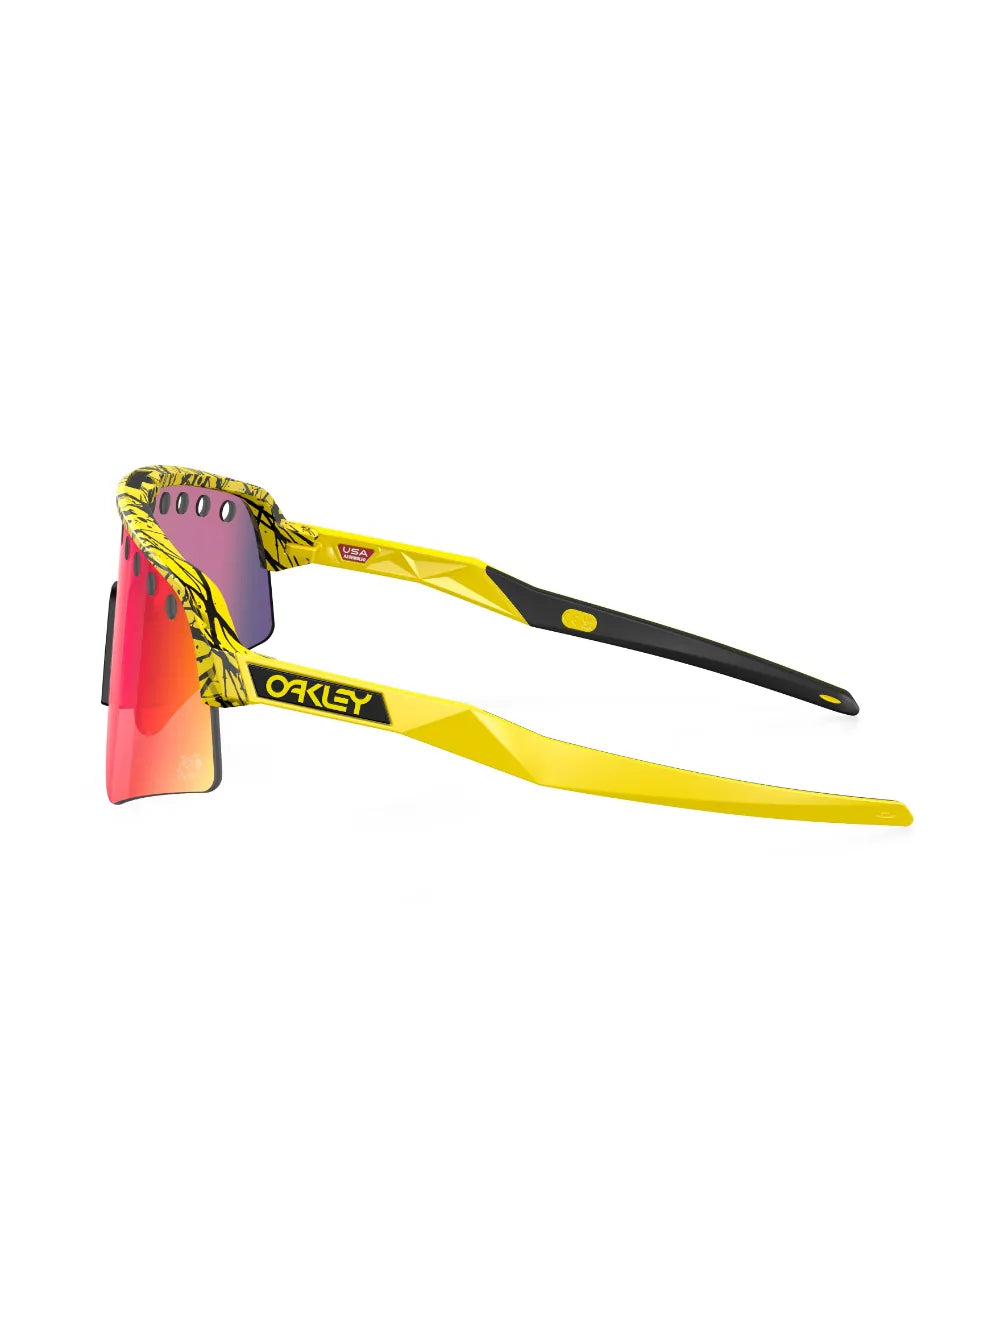 Oakley Sutro Lite Sweep Cycling Glasses - Tour De France Edtition